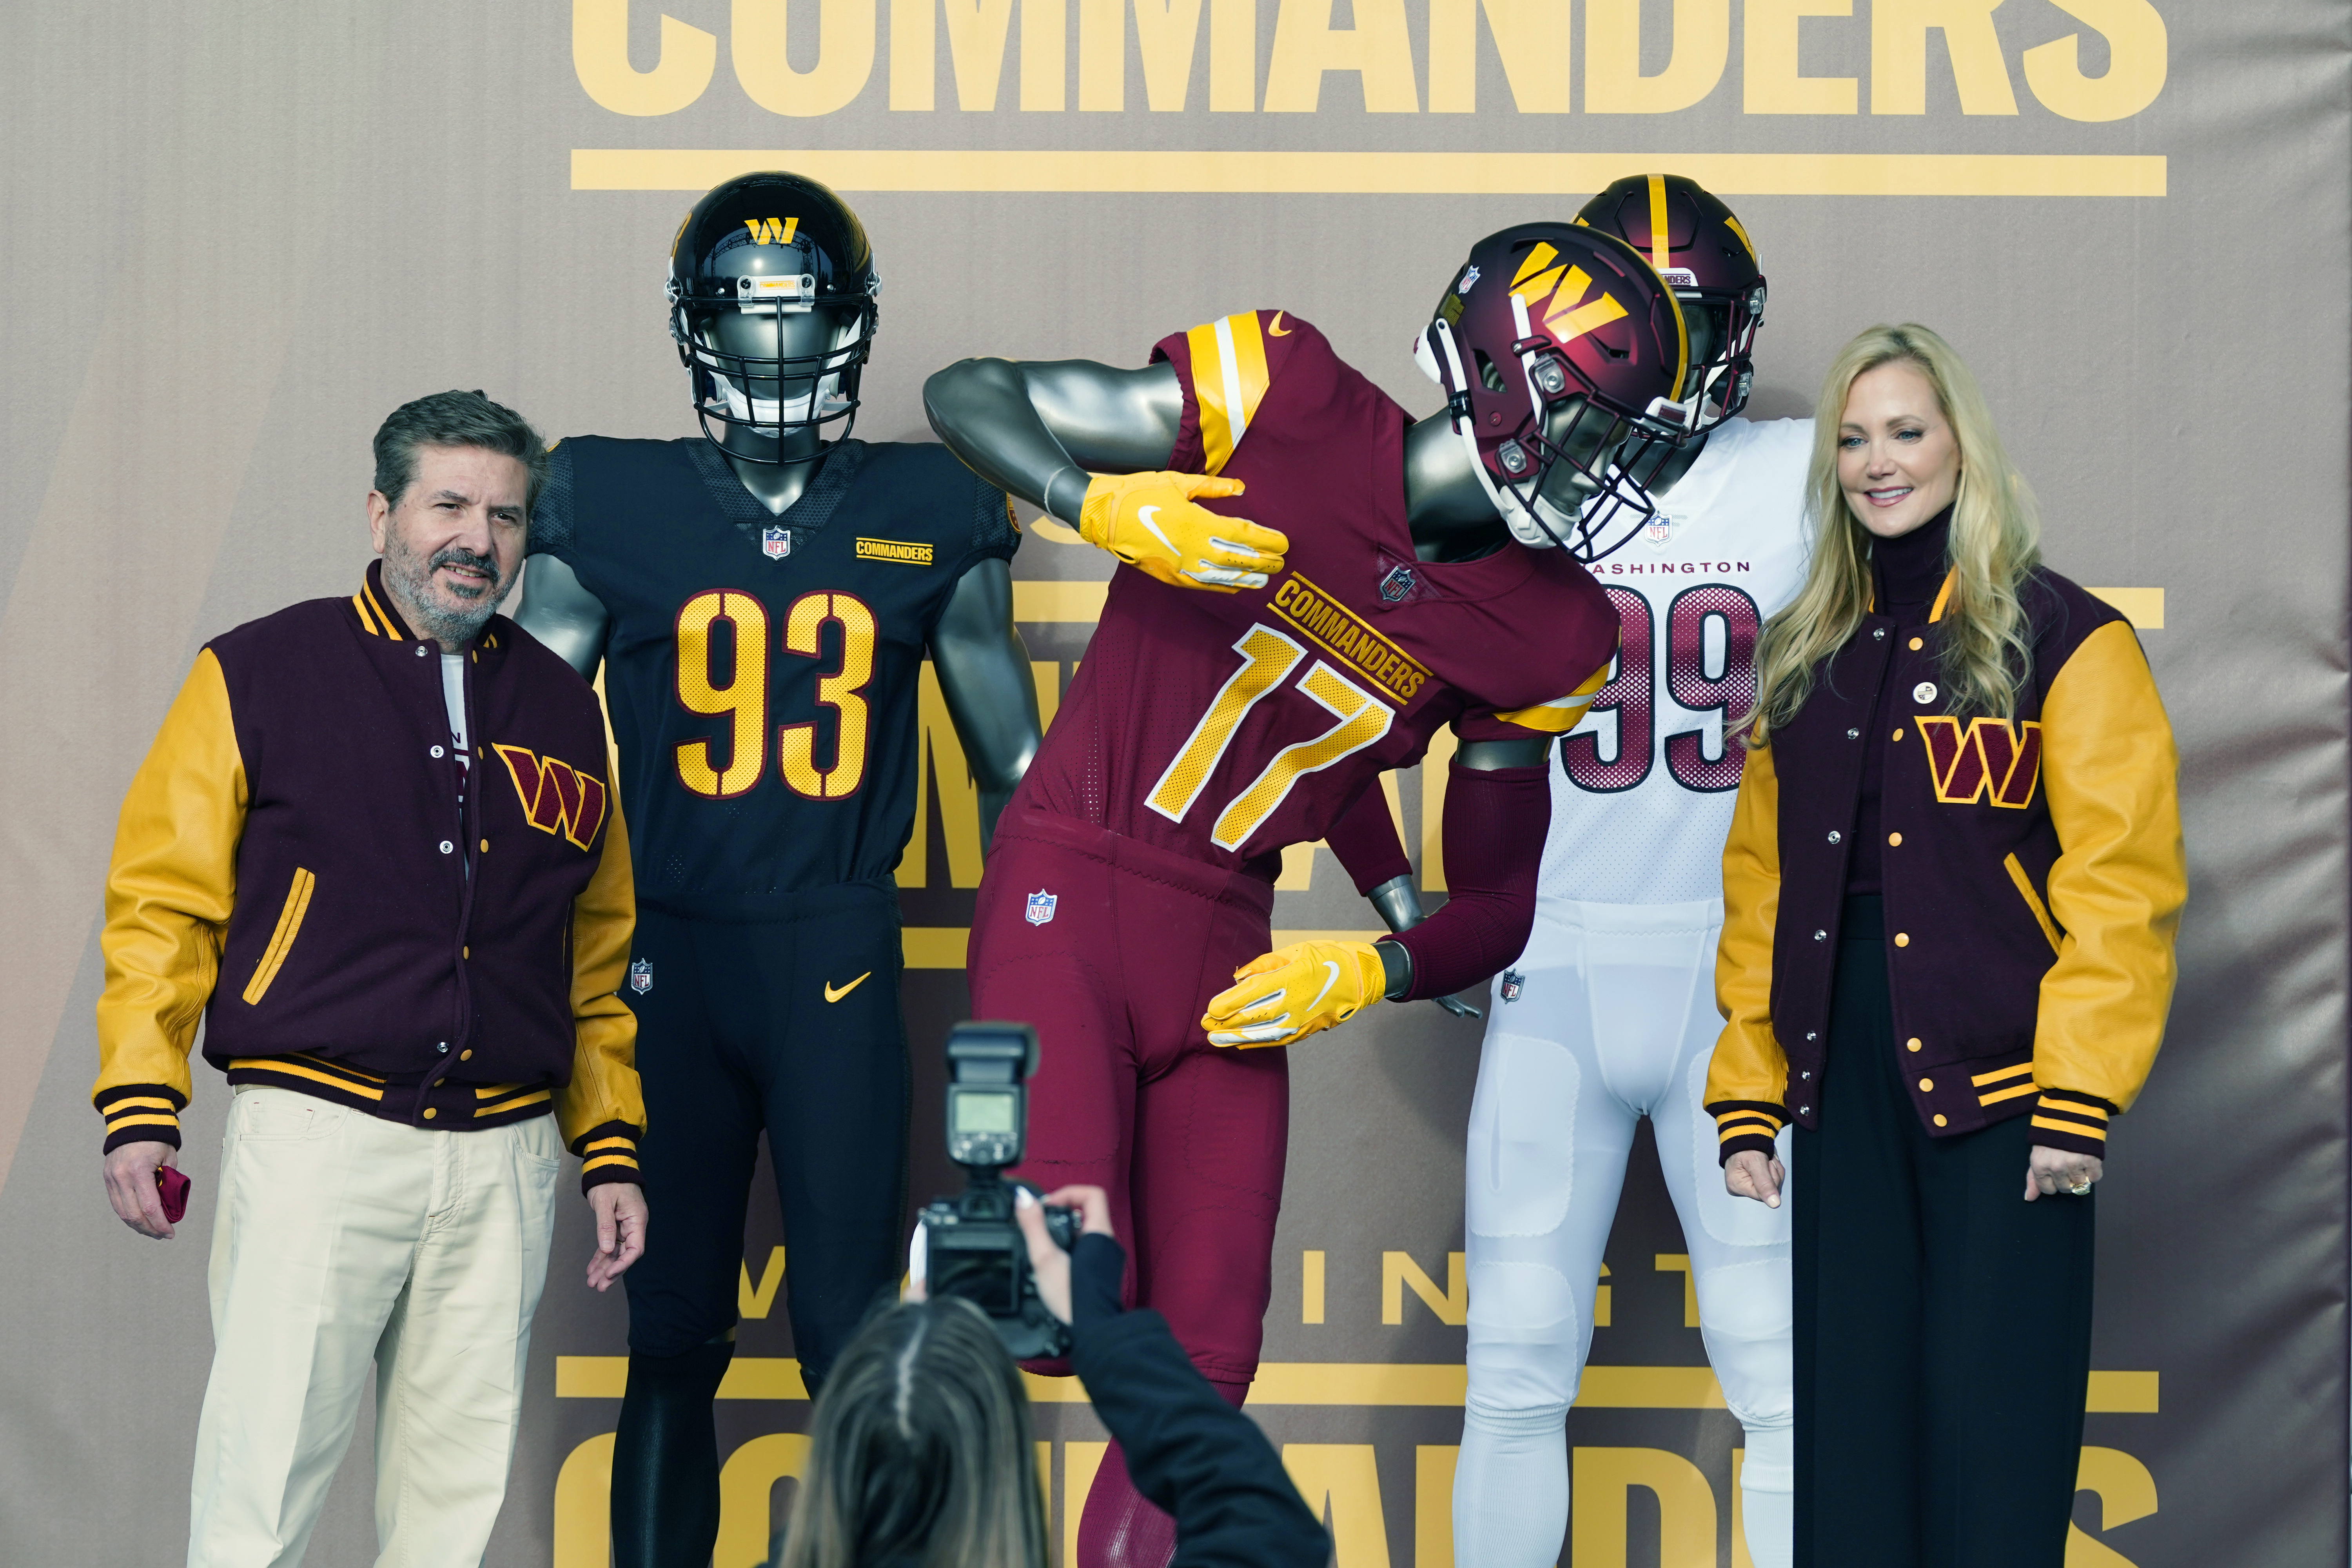 Sports jersey designer presents NFL rebrand concepts